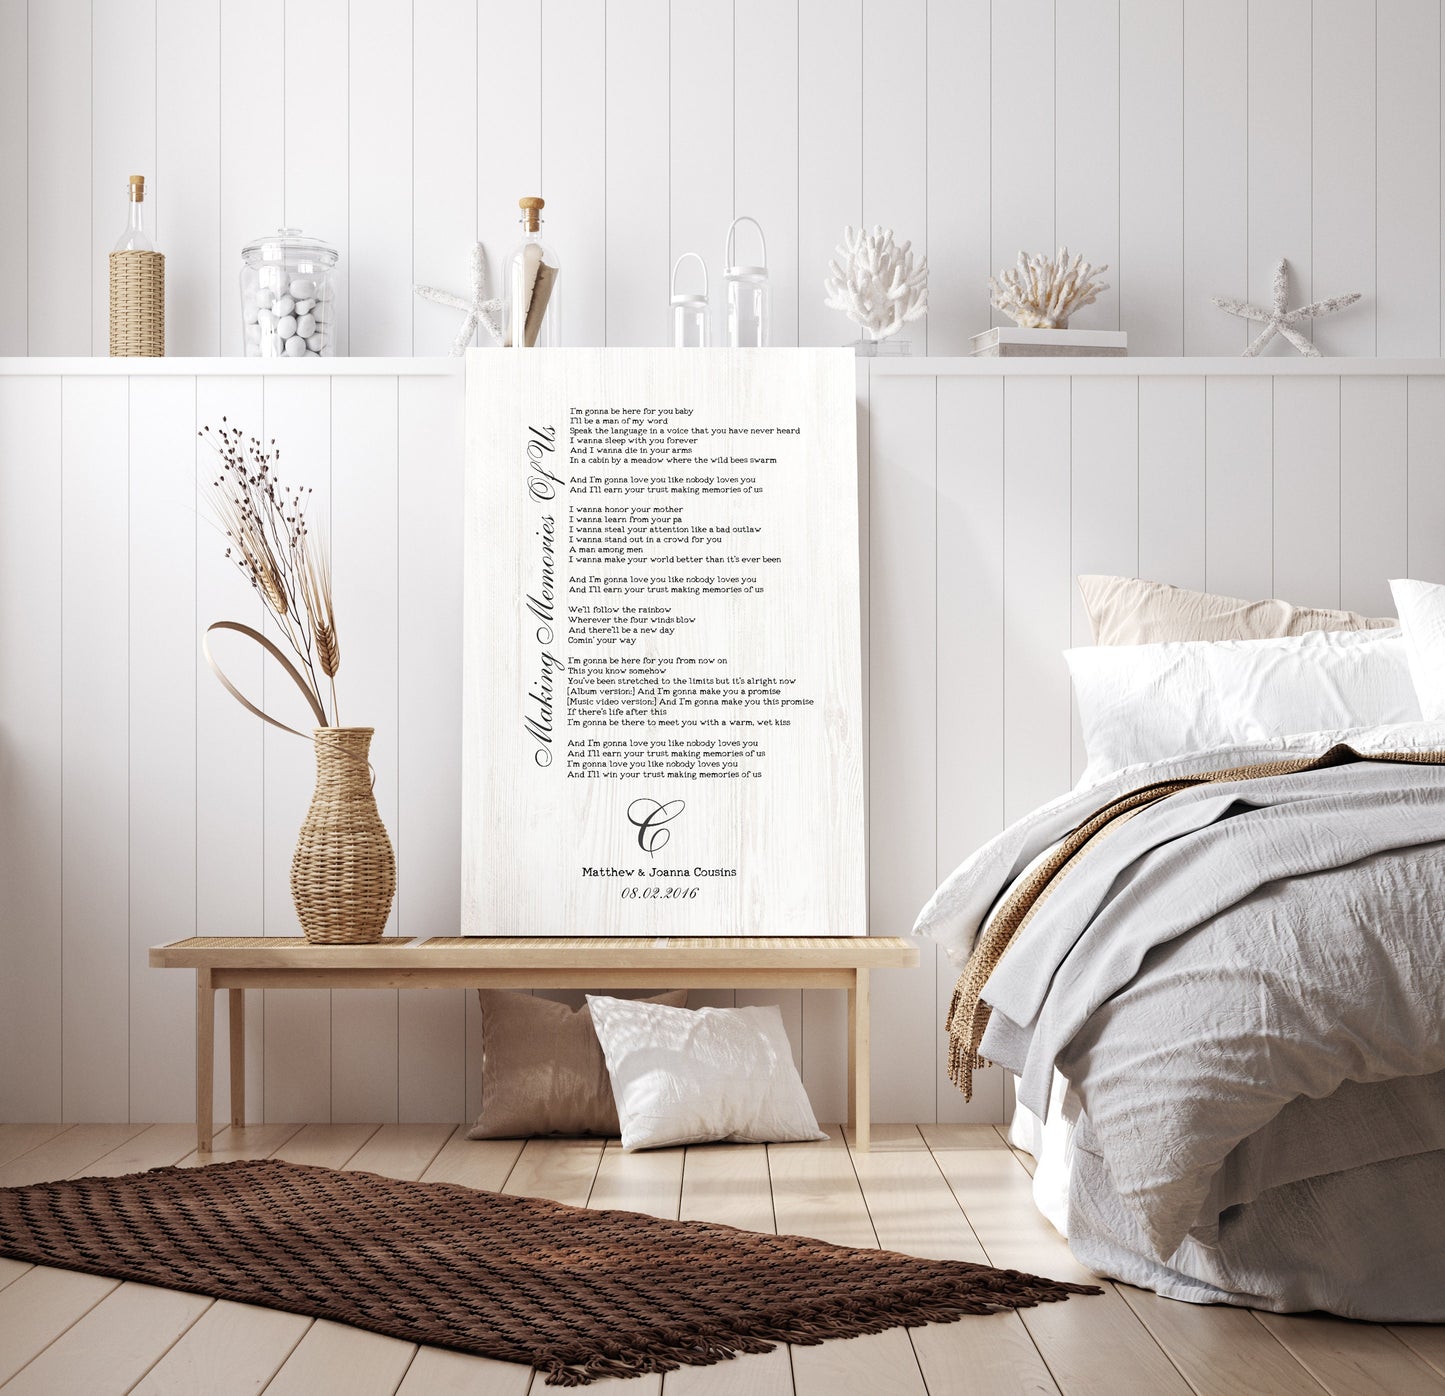 Song Lyrics Custom Wood Sign Farmhouse Style Living Room Decor -  Norway